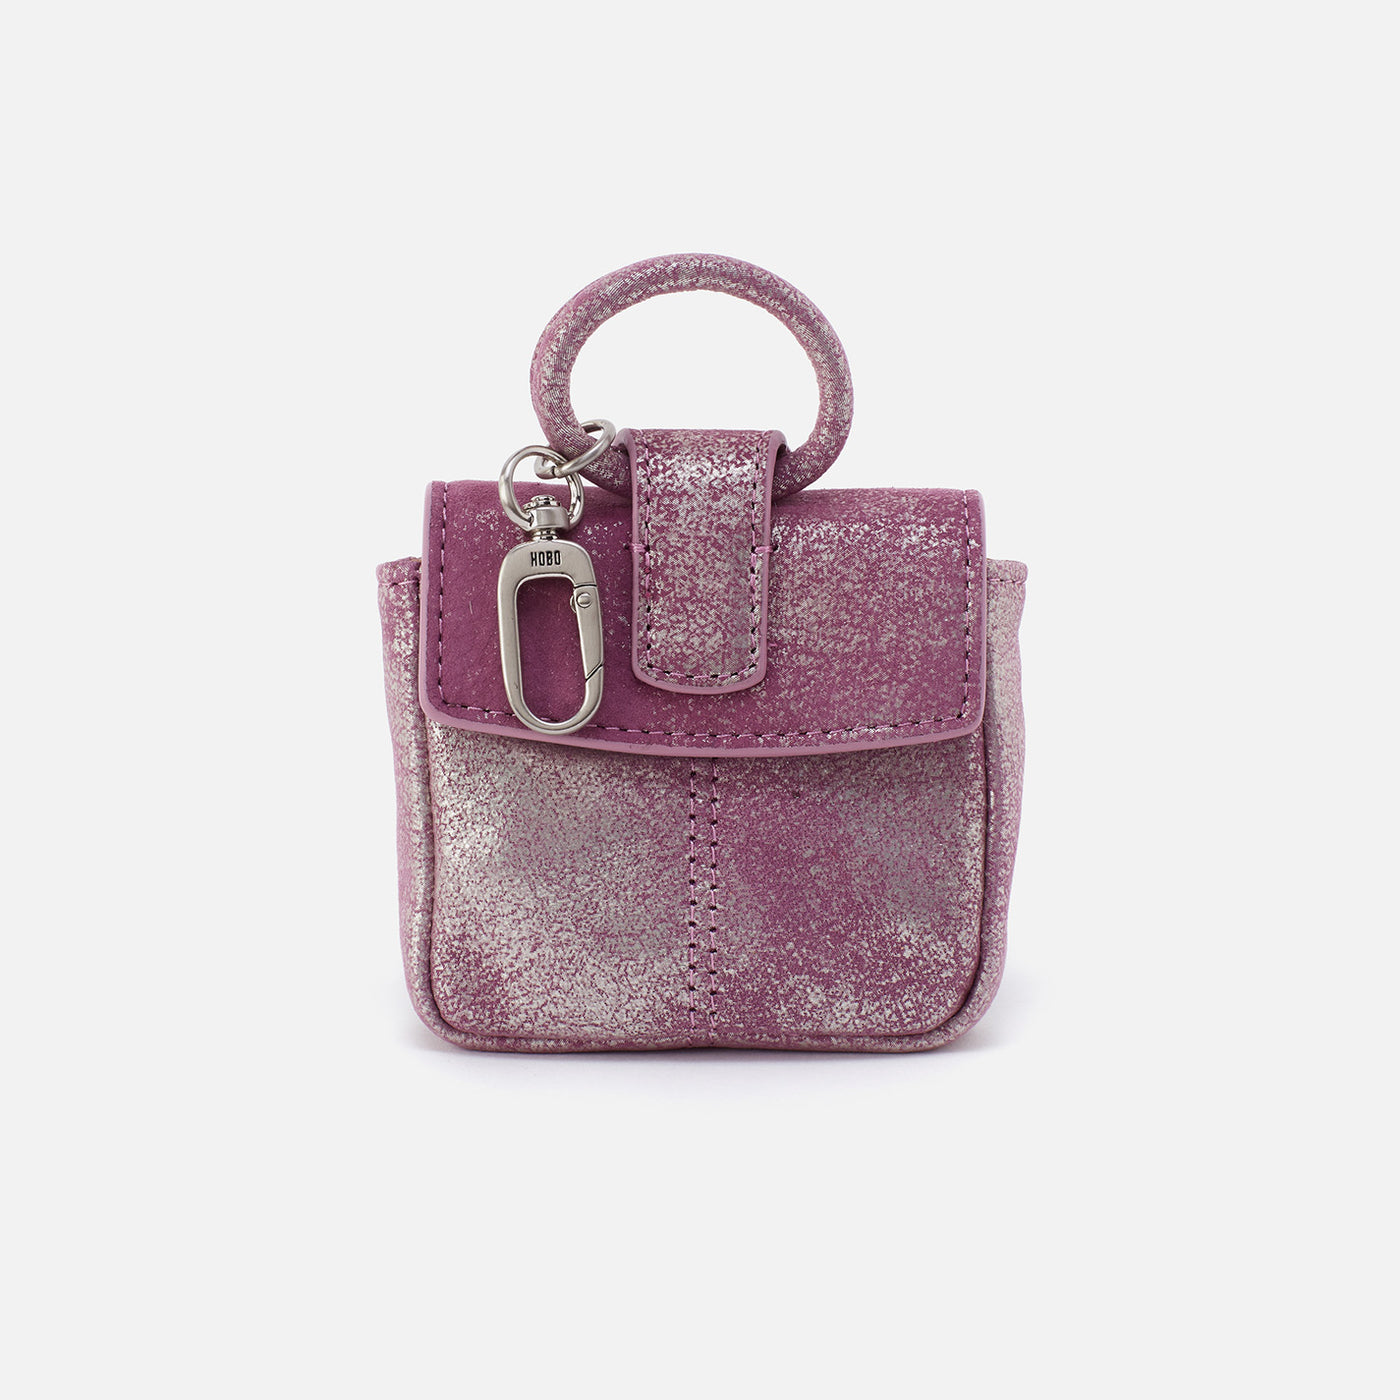 Buy Pahajim Women Leather Top Handle Handbags Satchel Purse Shoulder Bag  Tote Bag (Brown) at Amazon.in